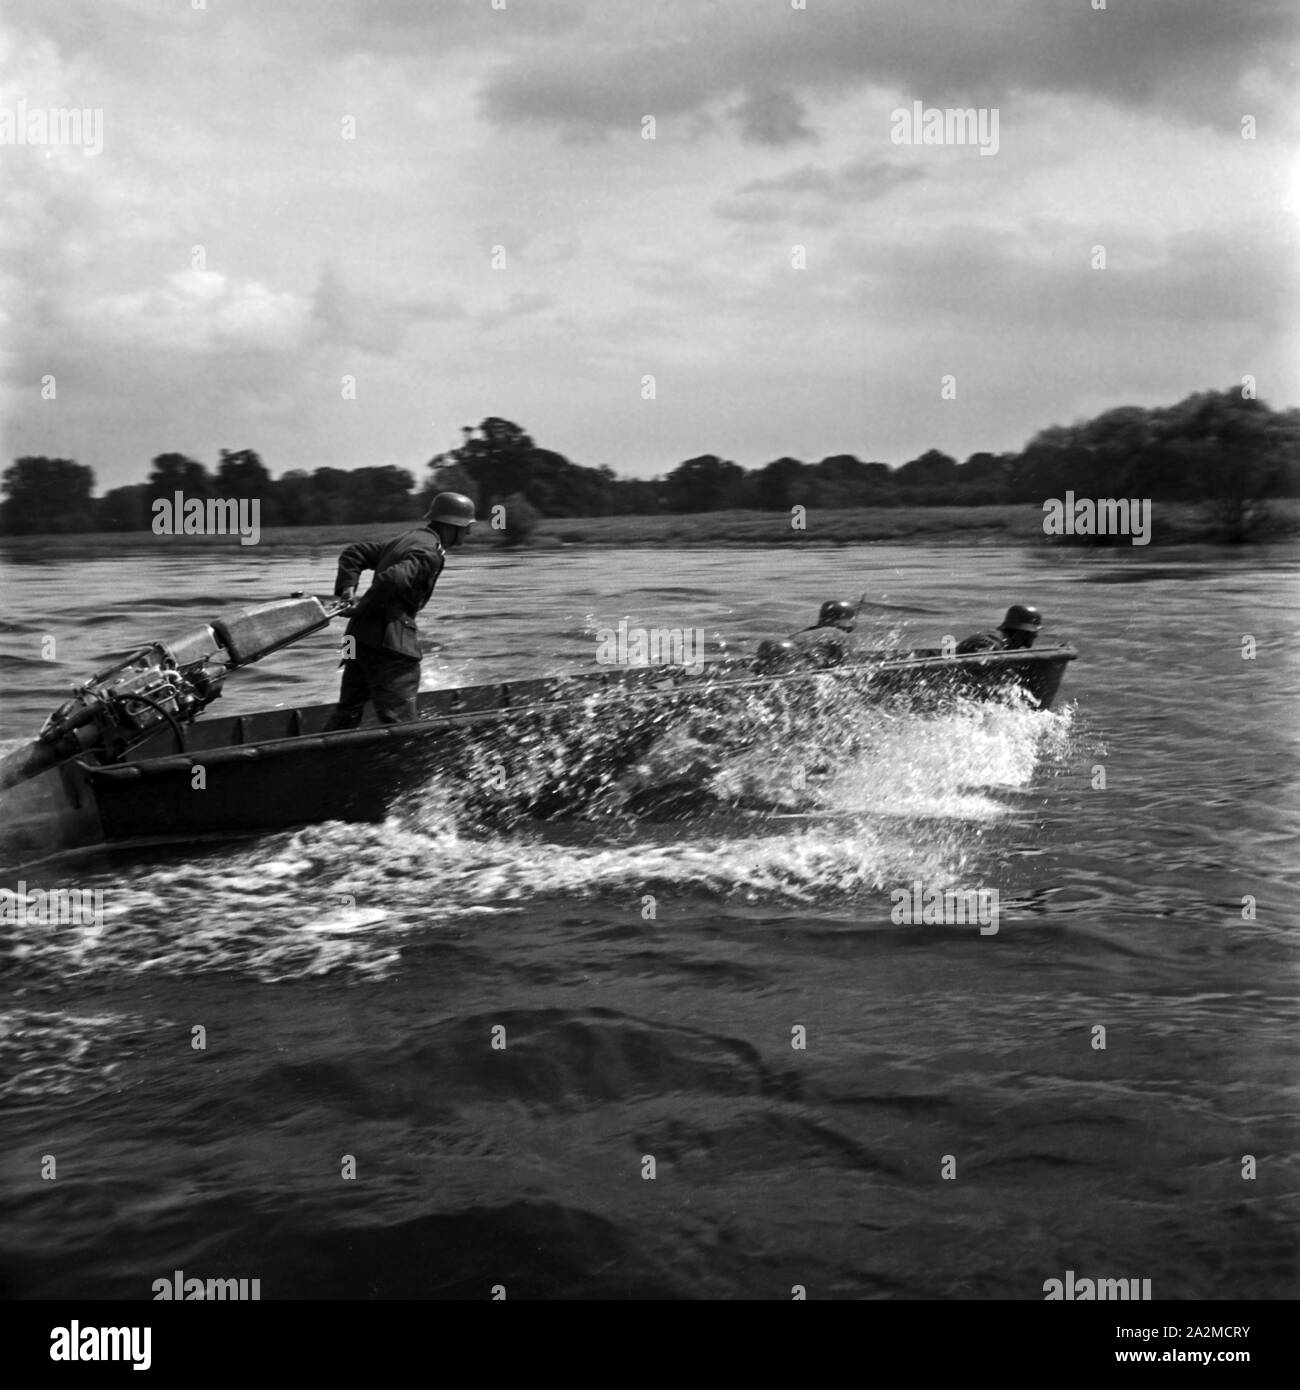 Original-Unterschrift: Sturmboote überqueren einen Fluß, Deutschland 1940er Jahre. Assault boats crossing a river, Germany 1940s. Stock Photo